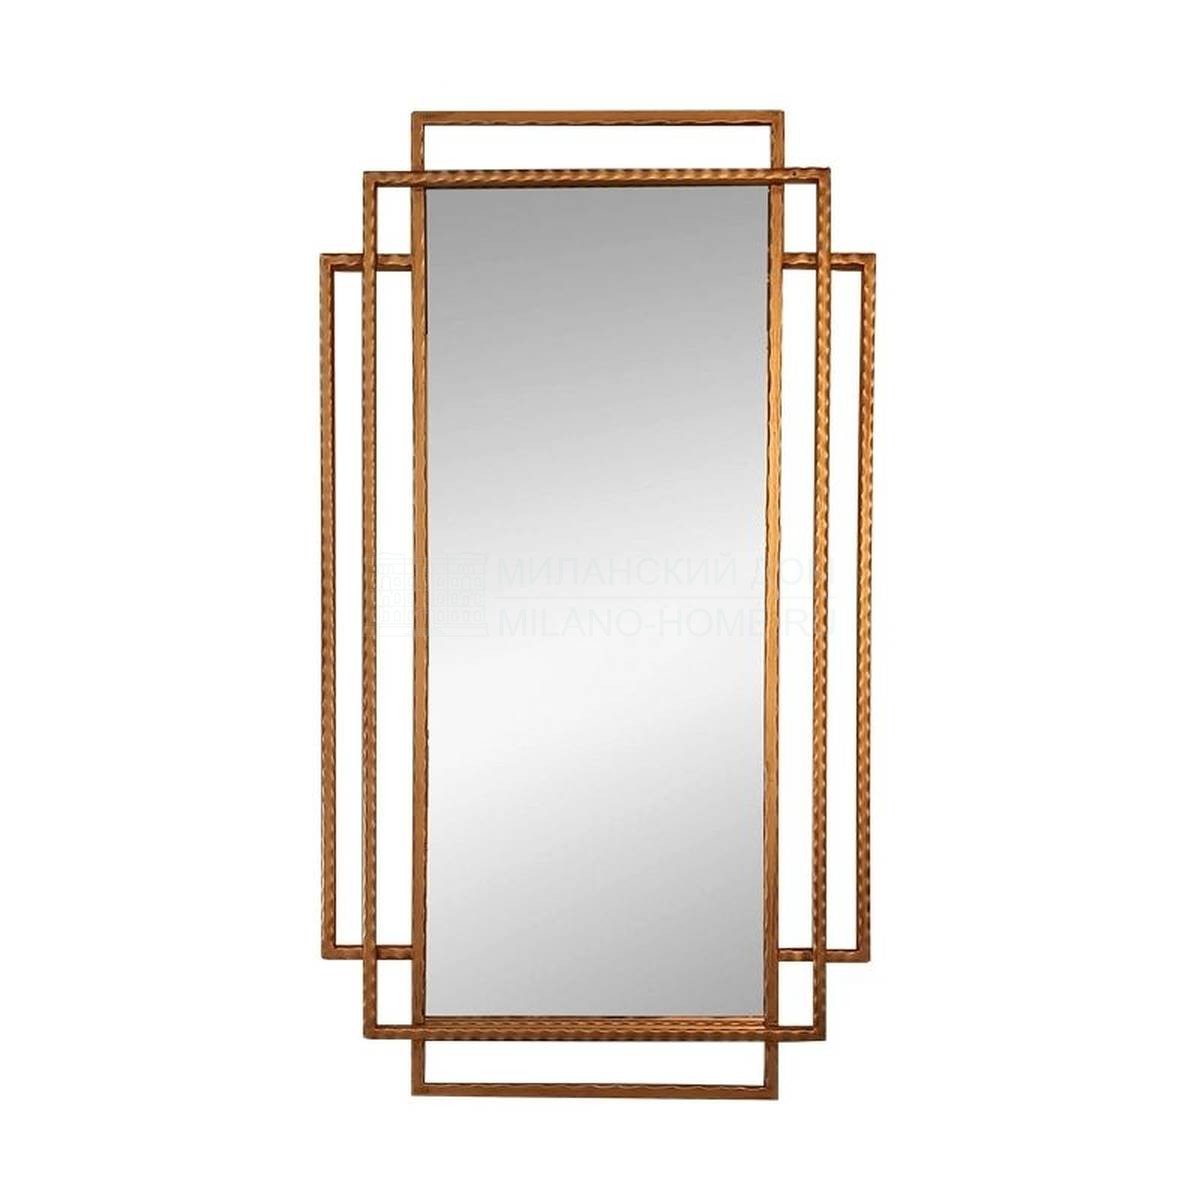 Зеркало настенное H1236 mirror из Испании фабрики GUADARTE